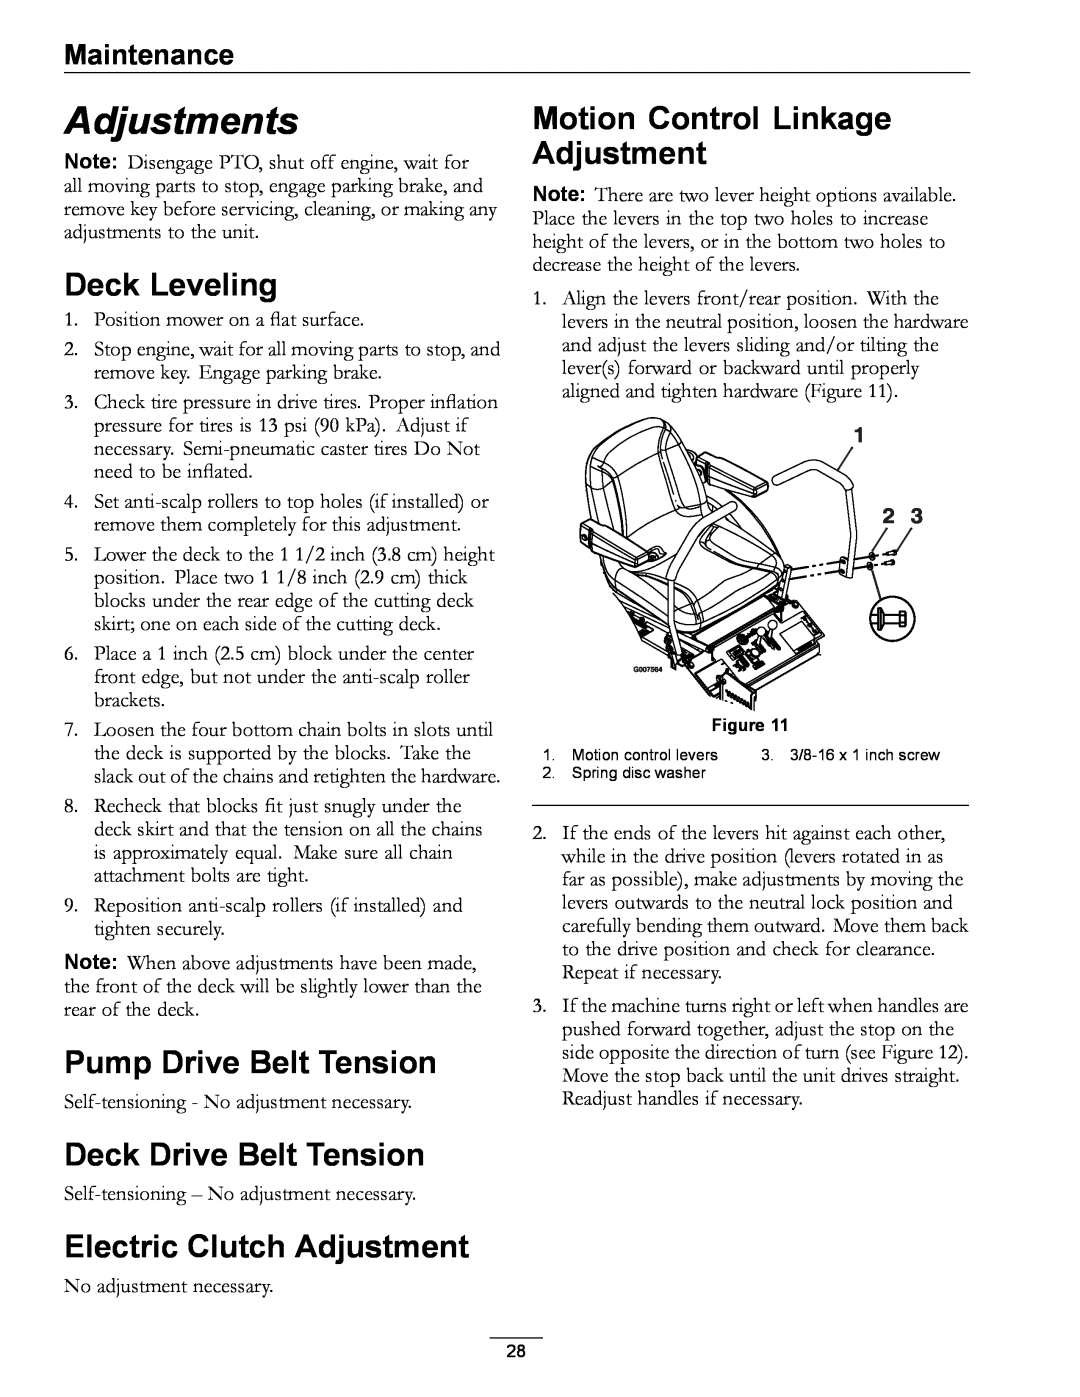 Exmark Phazer Adjustments, Deck Leveling, Pump Drive Belt Tension, Deck Drive Belt Tension, Electric Clutch Adjustment 